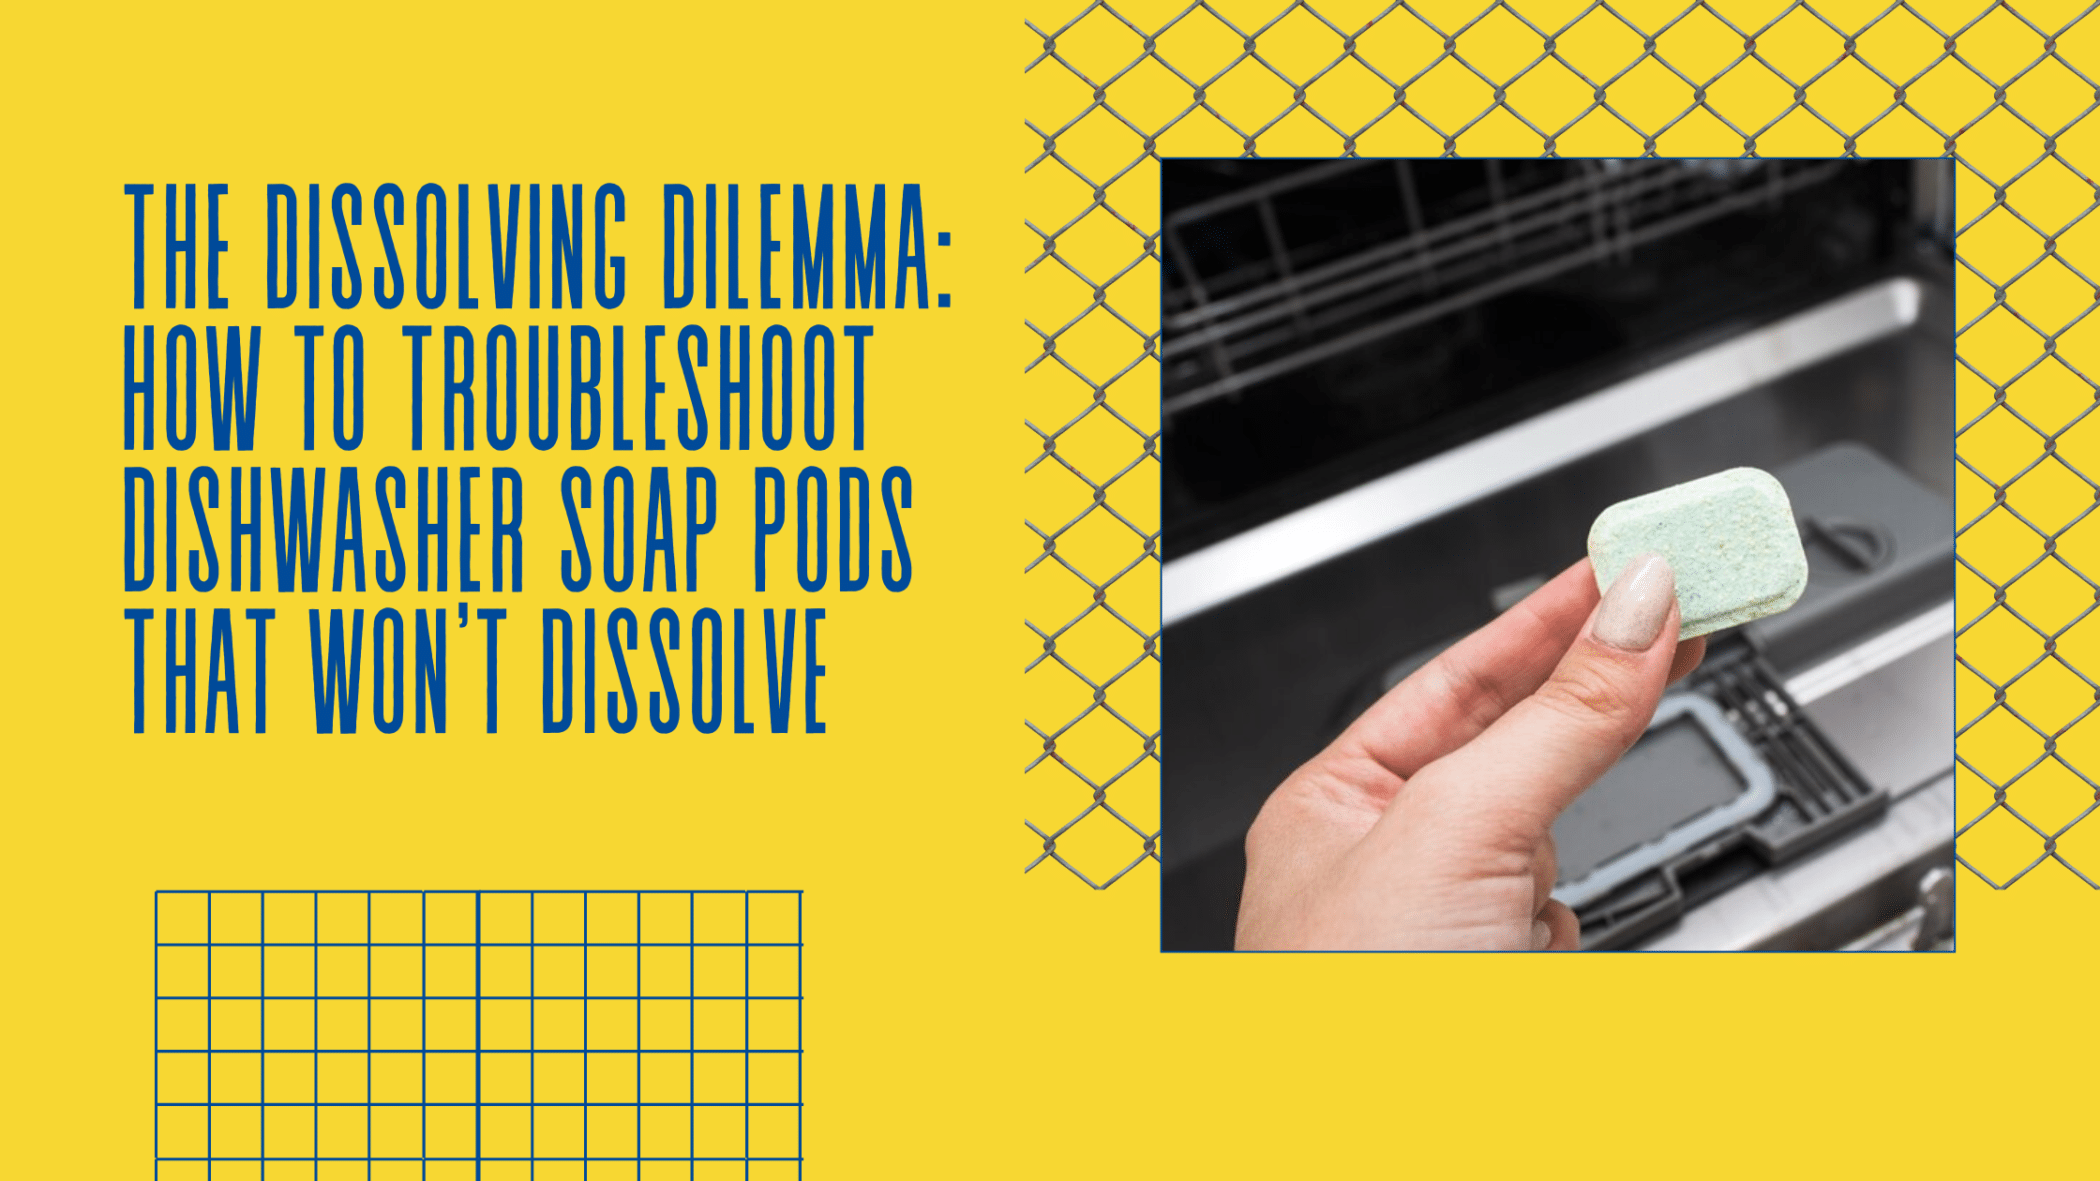 dishwasher soap pods not dissolving